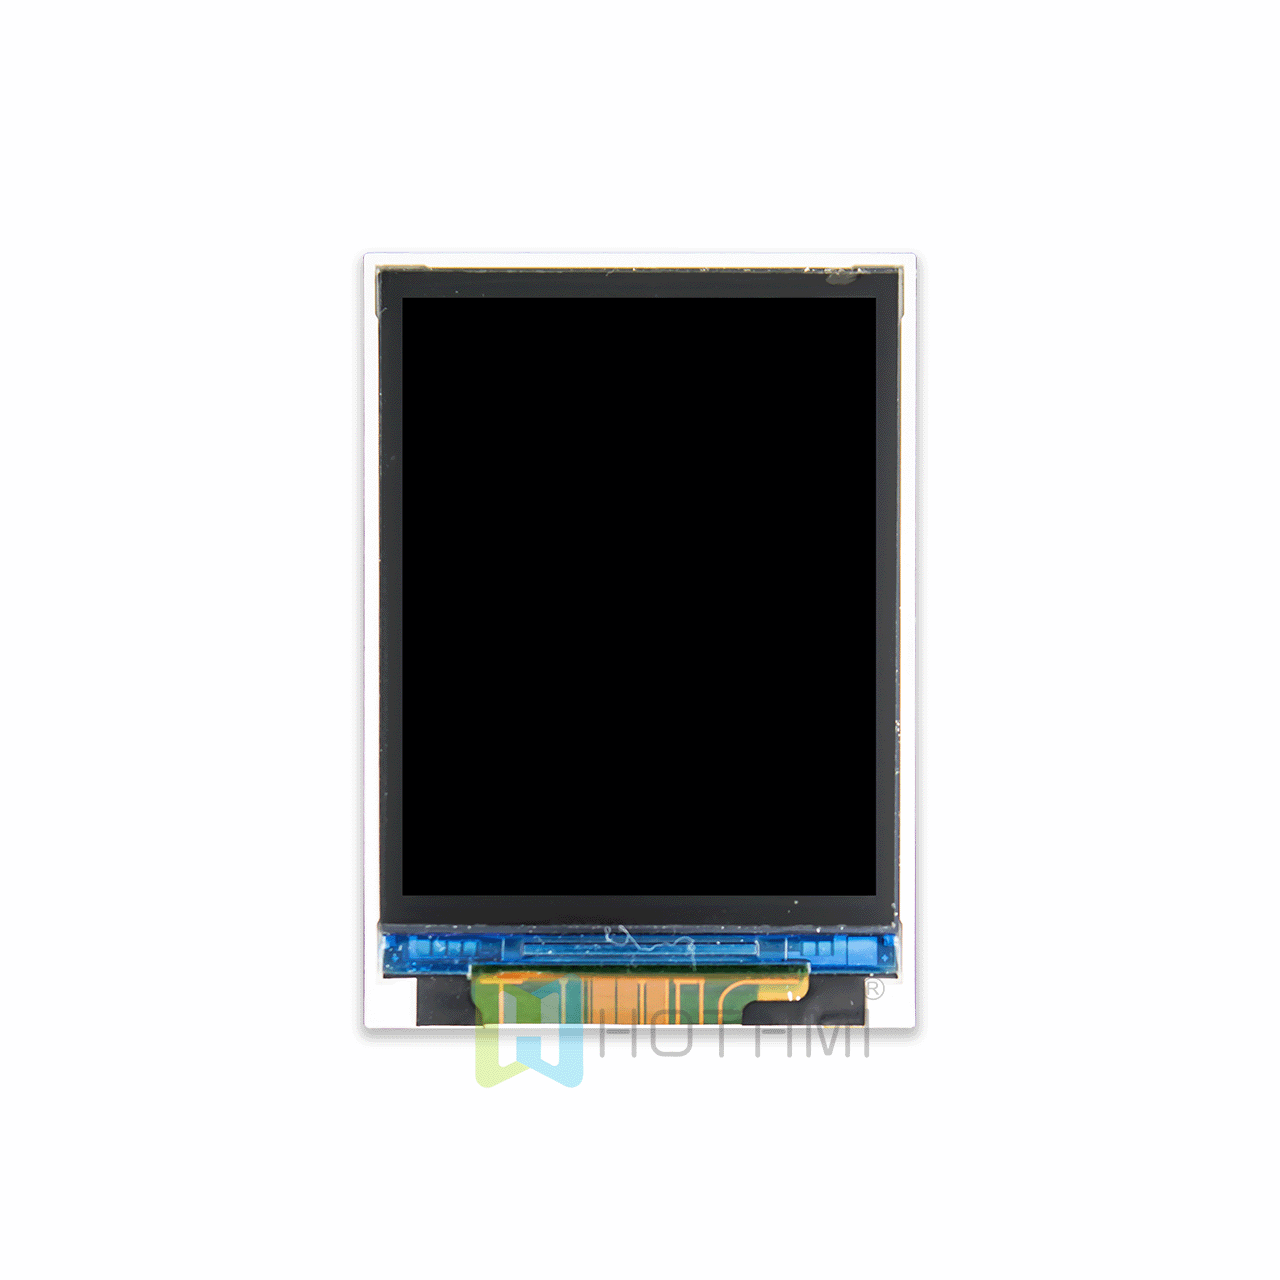 2.0 inch smart serial screen 240x320 pixels IPS UART HMI smart serial screen TFT display module readable under sunlight